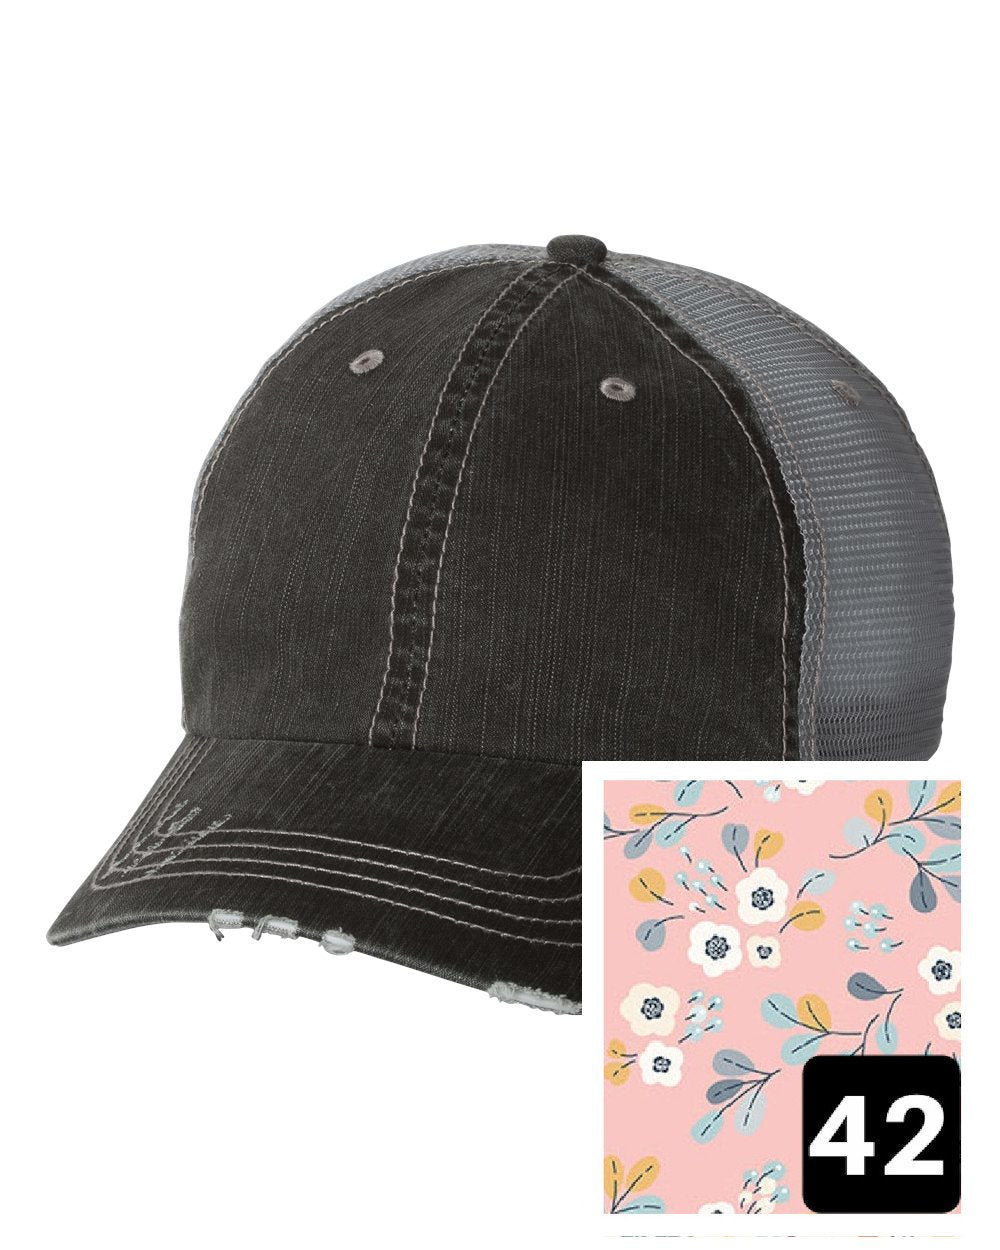 South Dakota Hat - Distressed Ponytail or Messy Bun Hat  - Many Fabric Choices